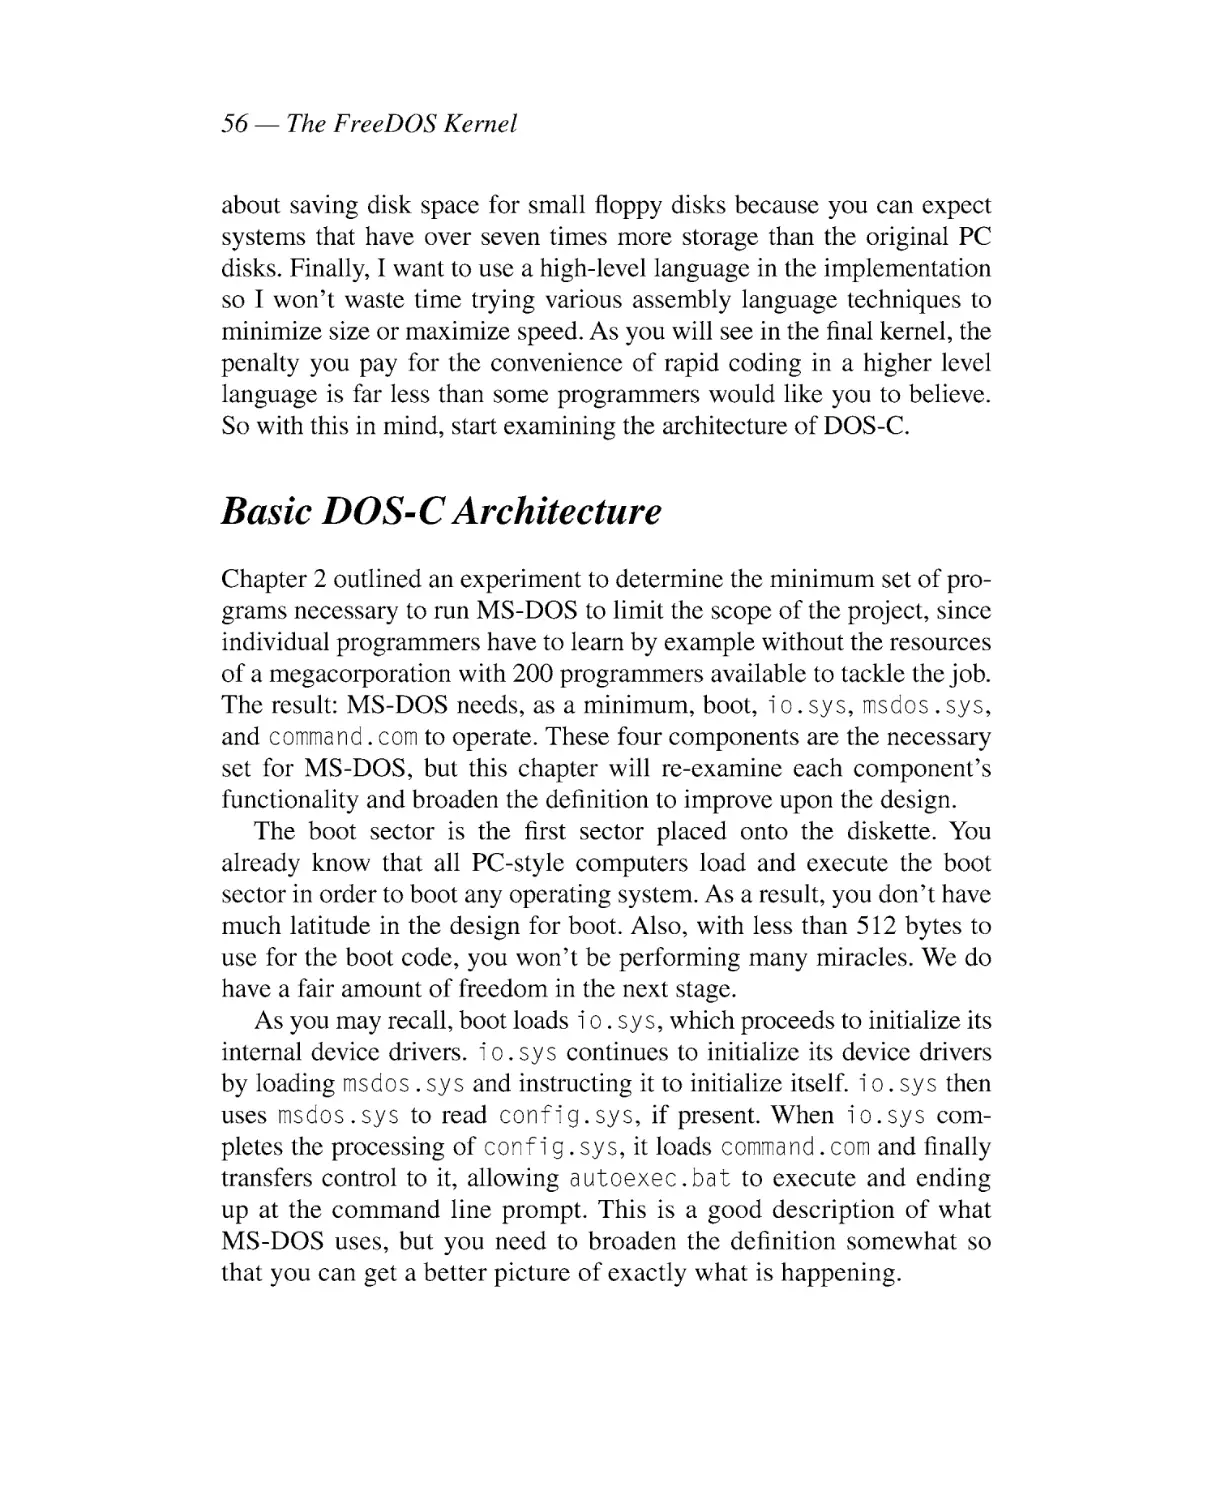 Basic DOS-C Architecture